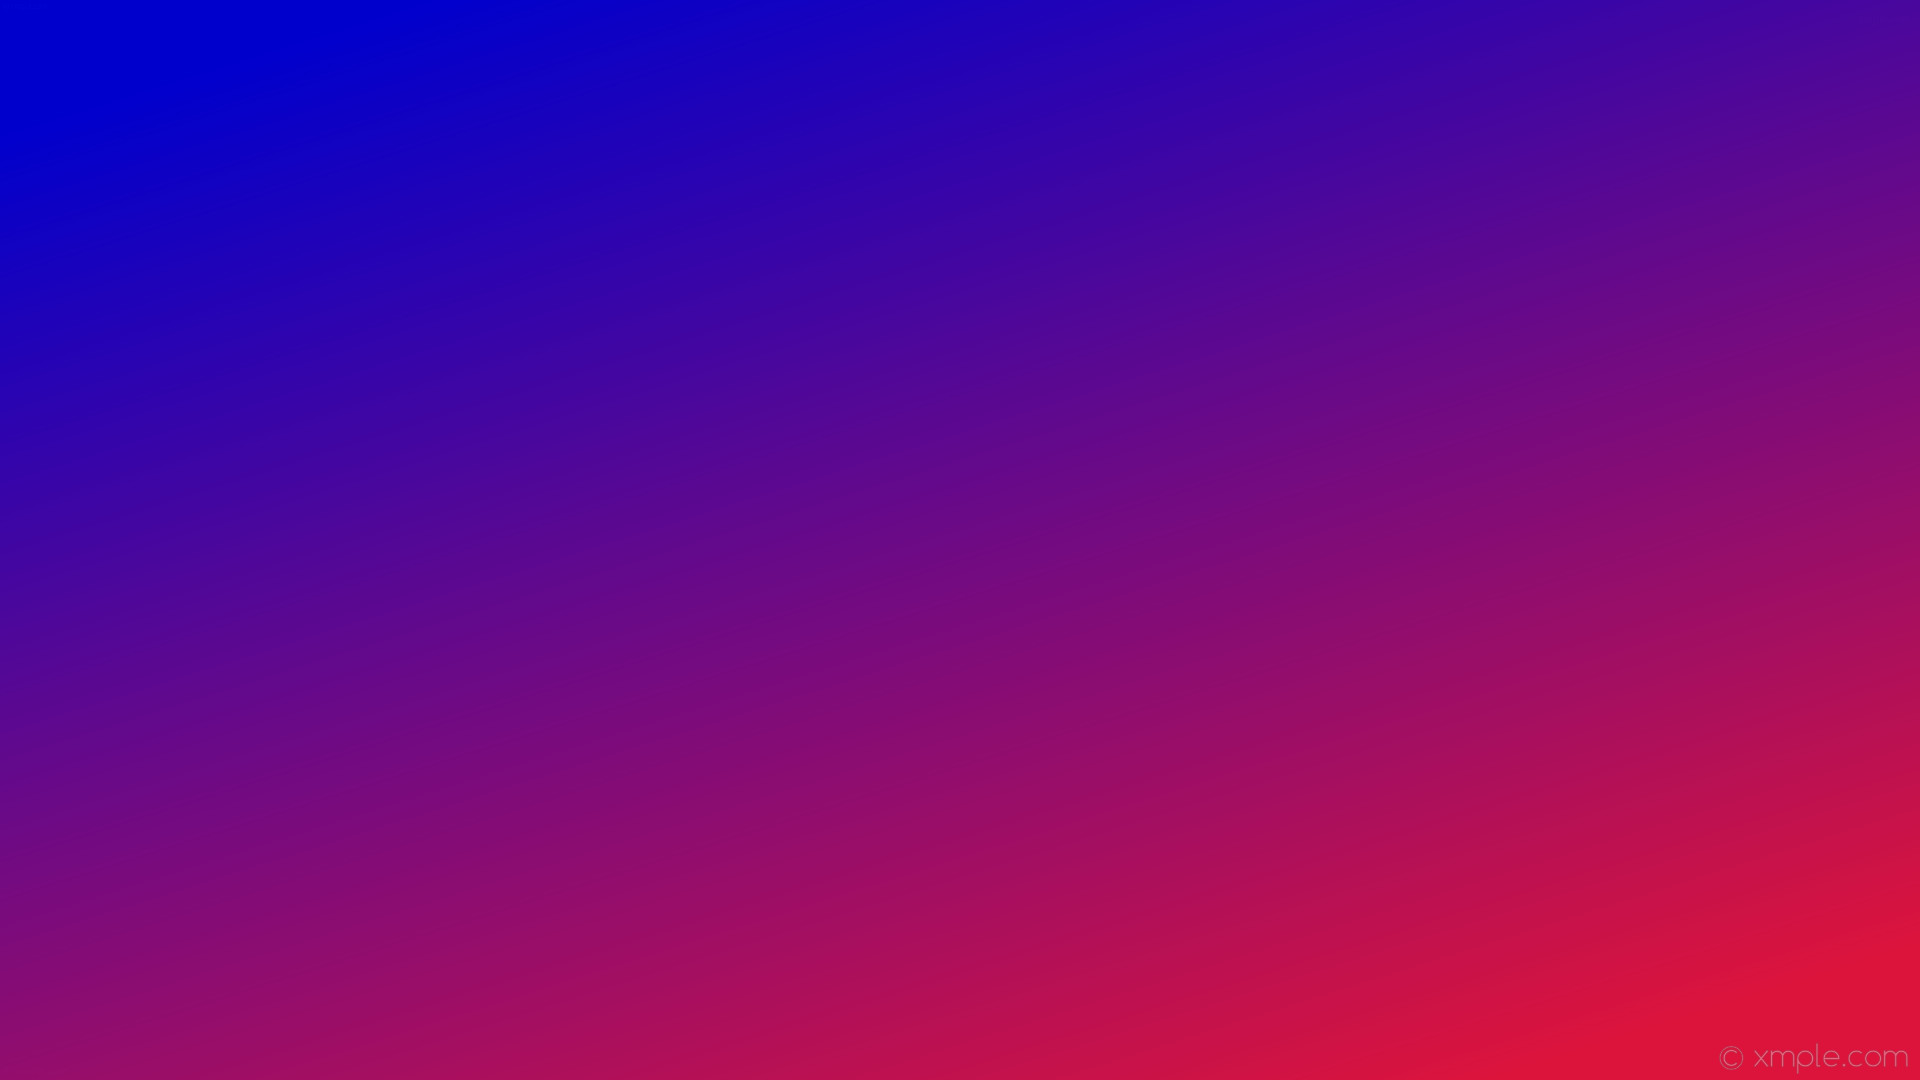 wallpaper red gradient linear blue crimson medium blue #dc143c #0000cd 315Â°